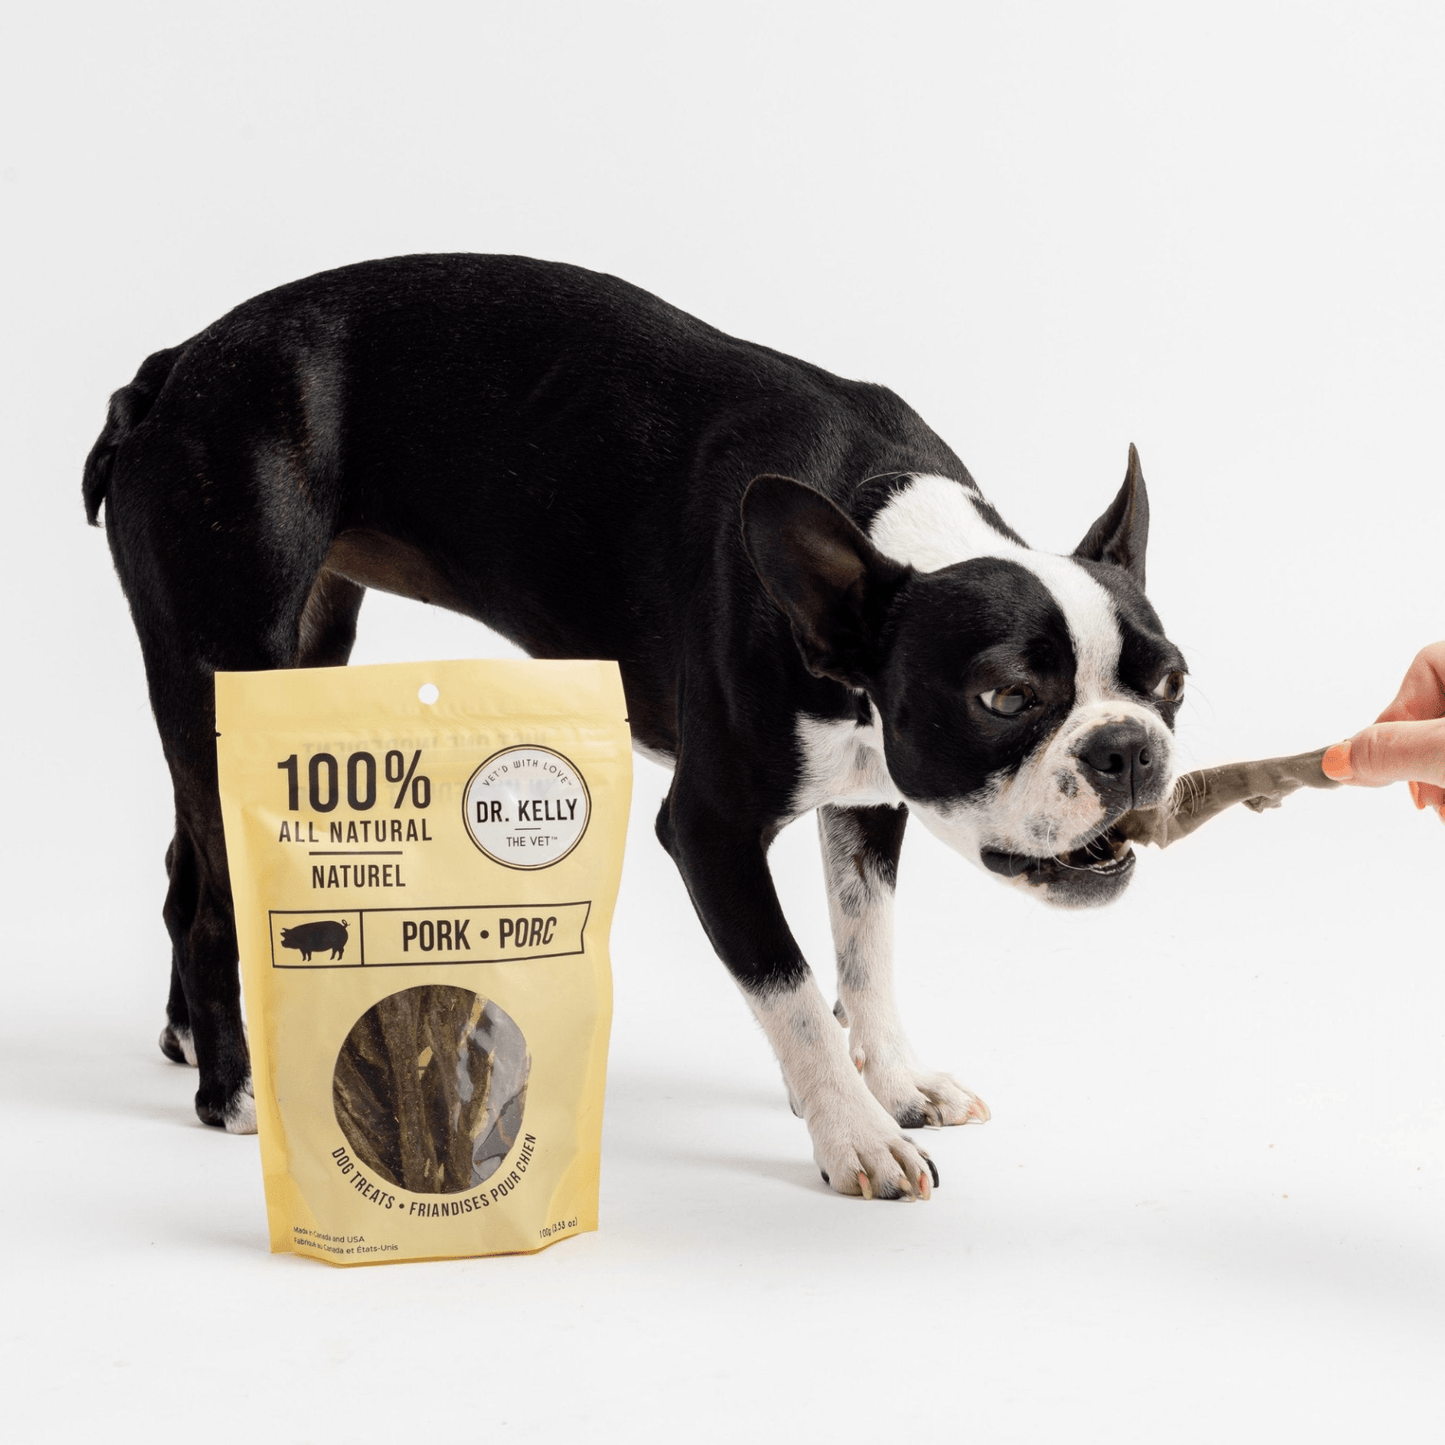 Dog and Pet Stuff 100g / 3.53 oz 4 pack -  Dr. Kelly The Vet 100% Natural Dog Treats - Pork 100g / each